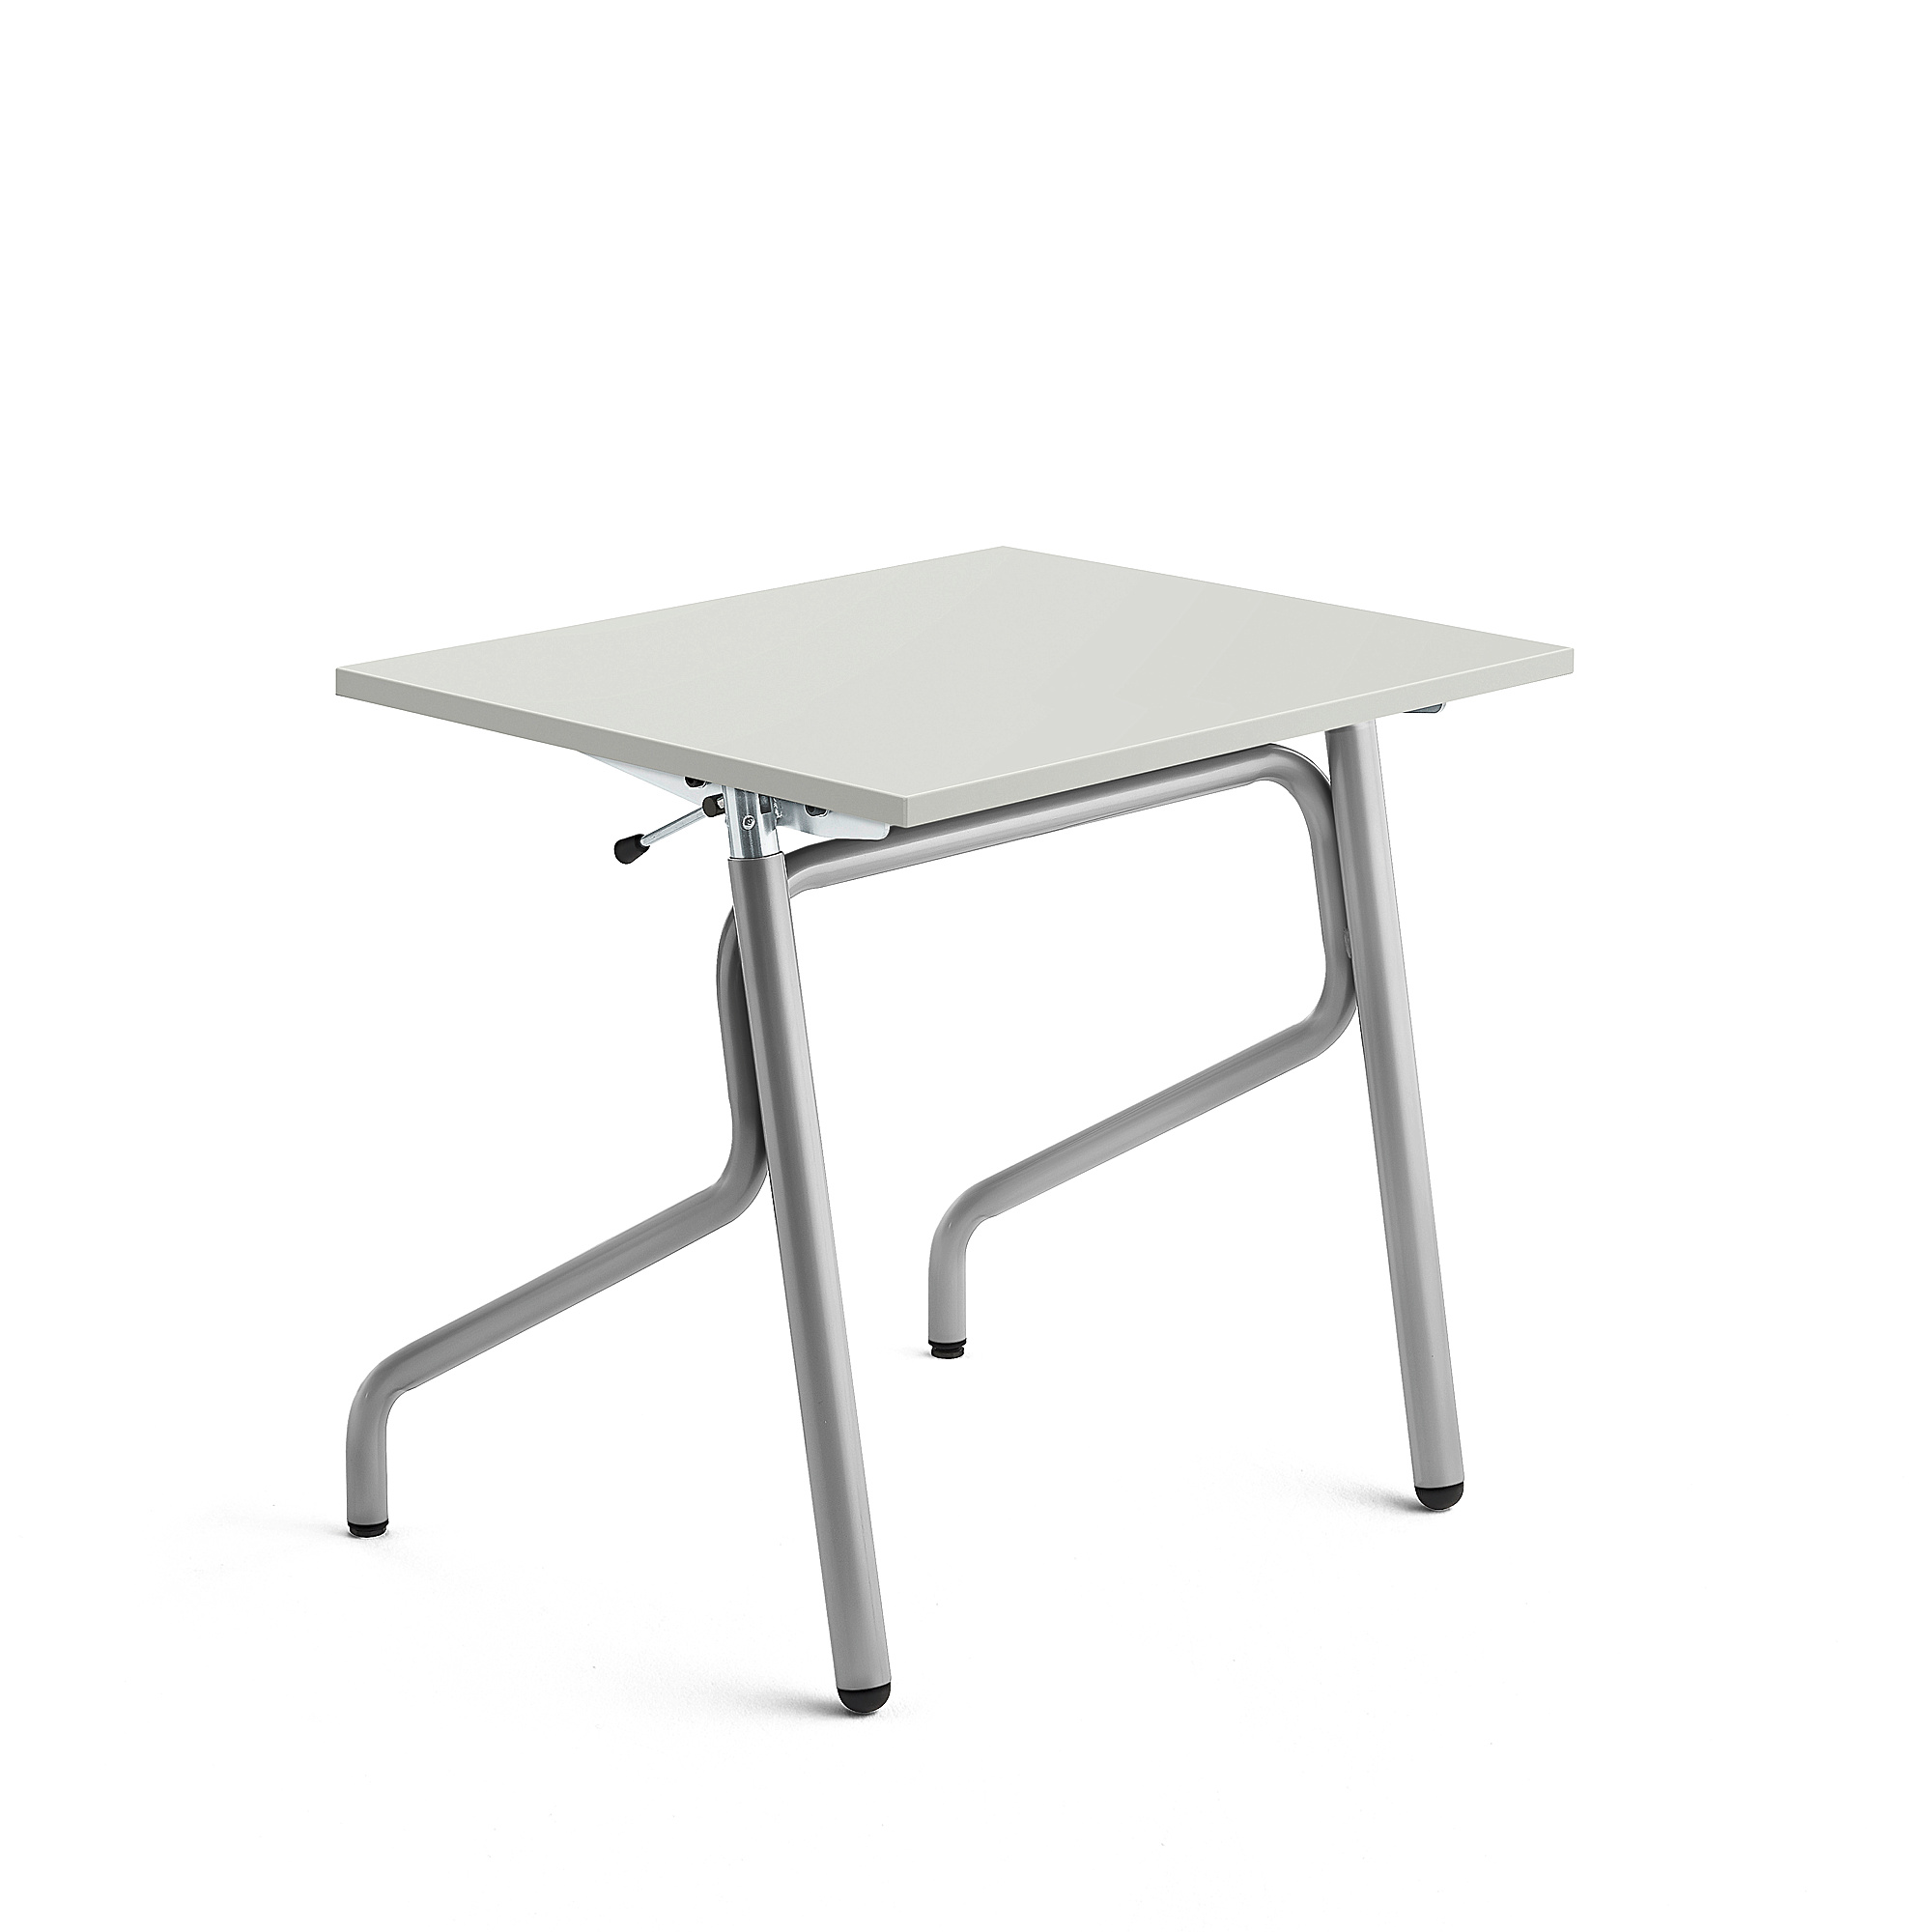 E-shop Nastaviteľná školská lavica ADJUST, 700x600 mm, HPL - šedá, strieborná